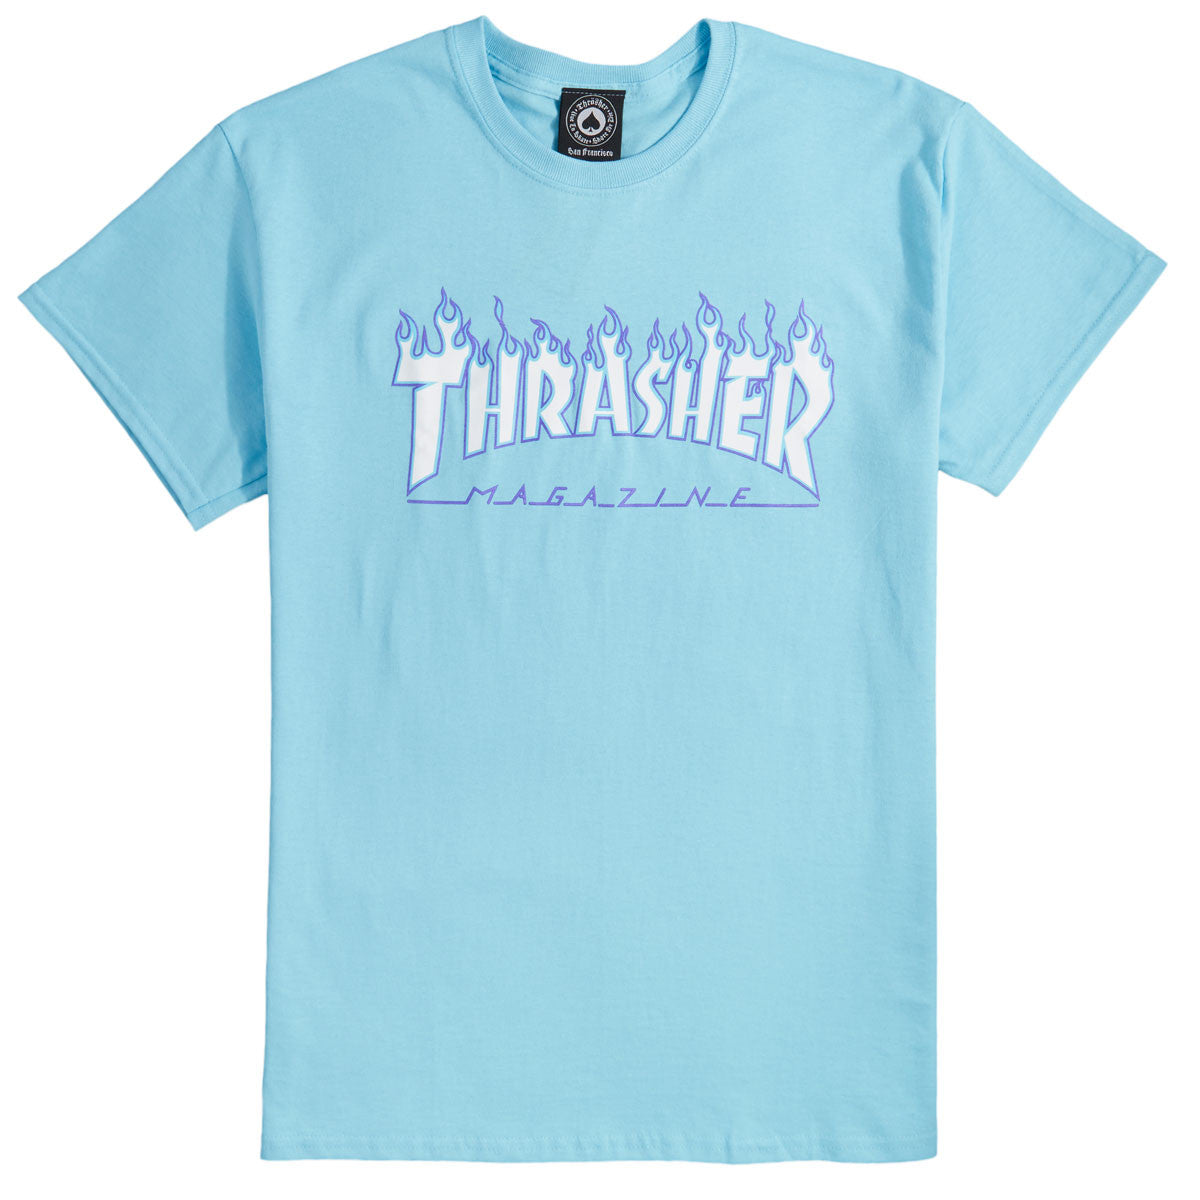 THRASHER - FLAME TEE - SKY BLUE